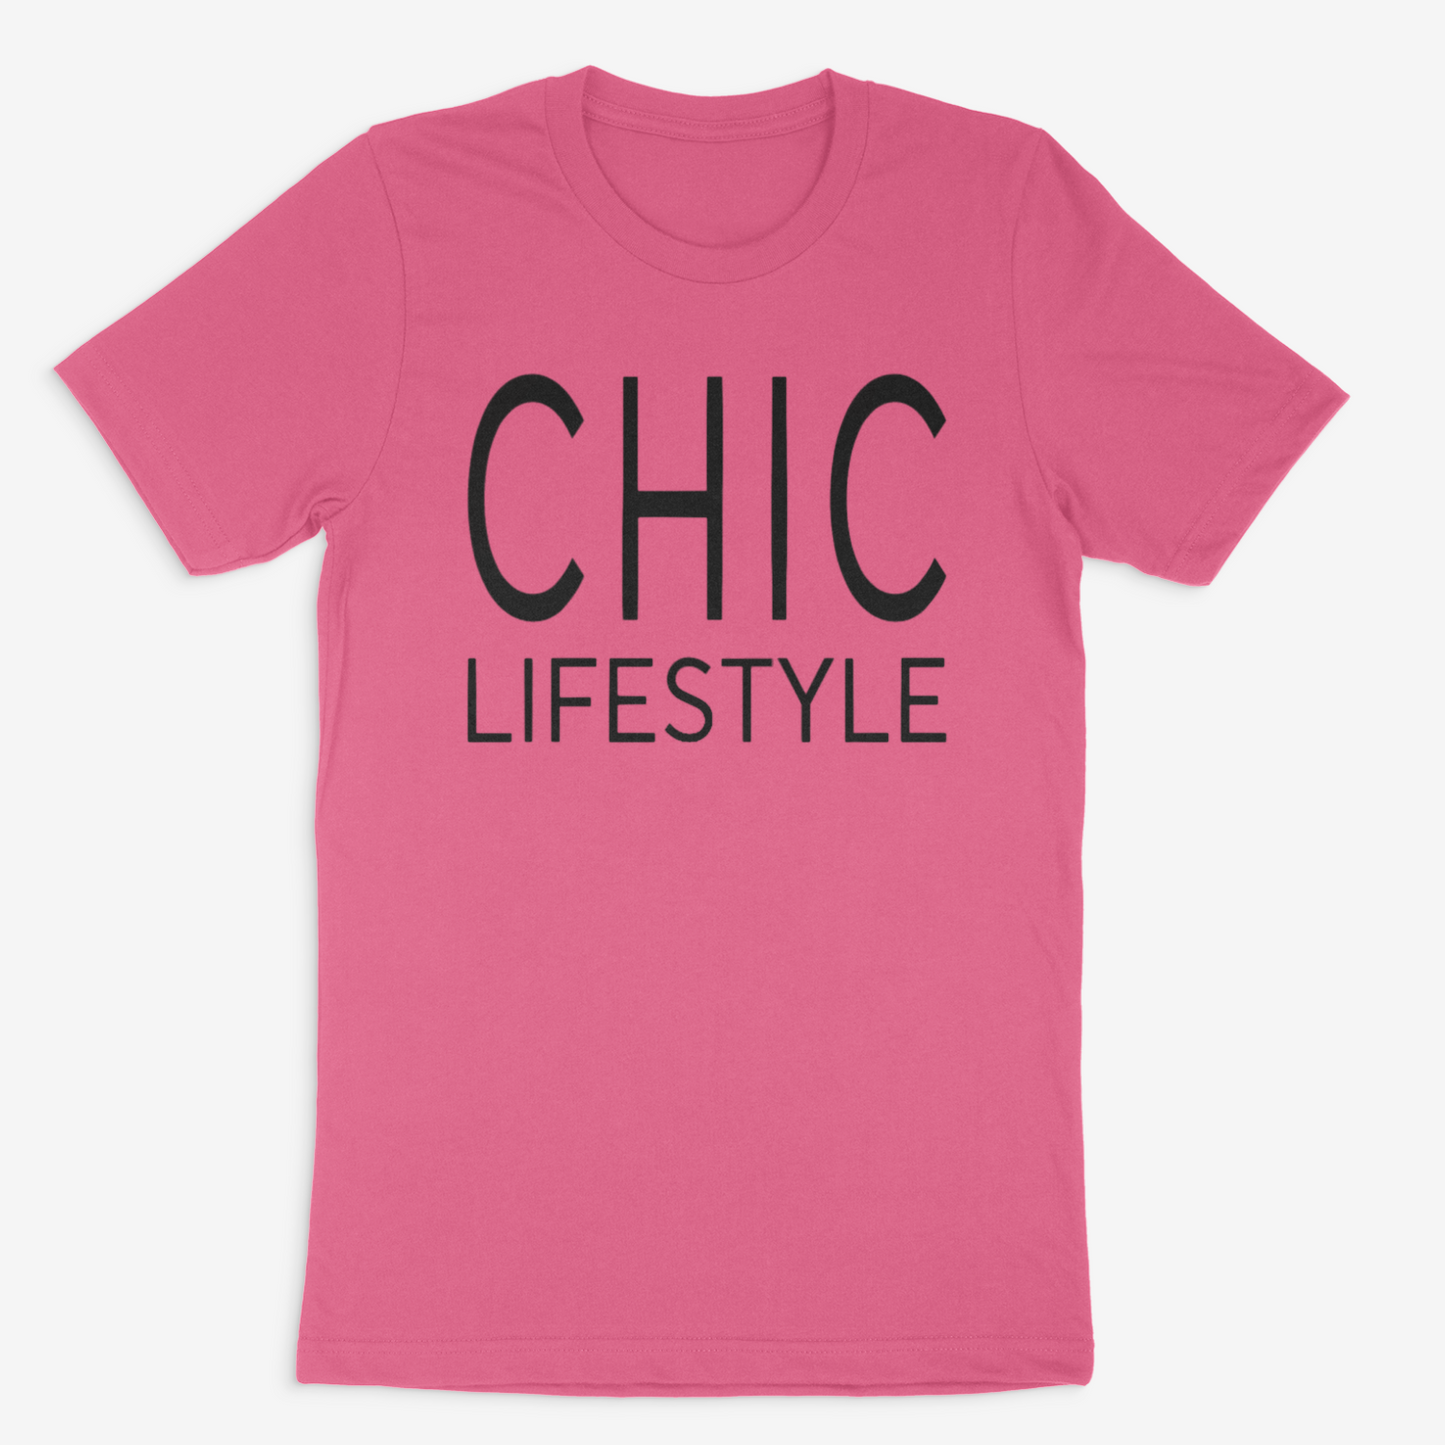 Chic Lifestyle Tee ( Black)